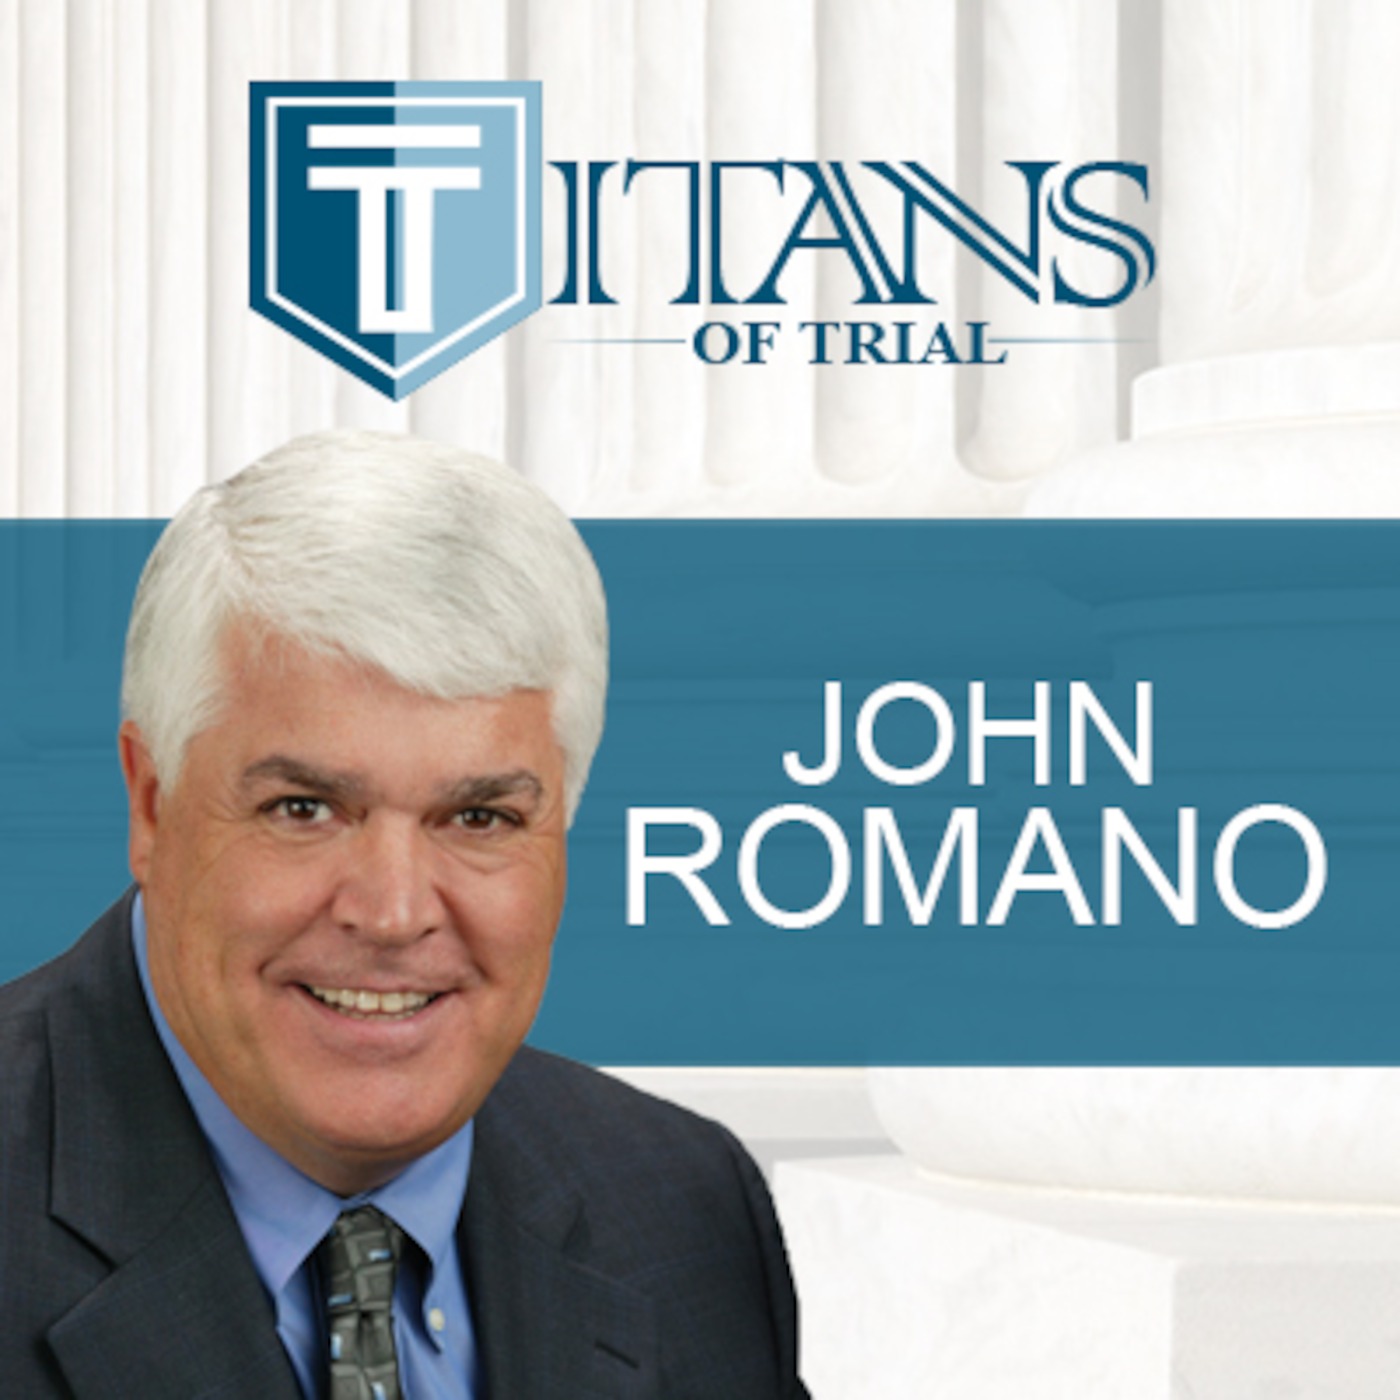 Titans of Trial - John Romano